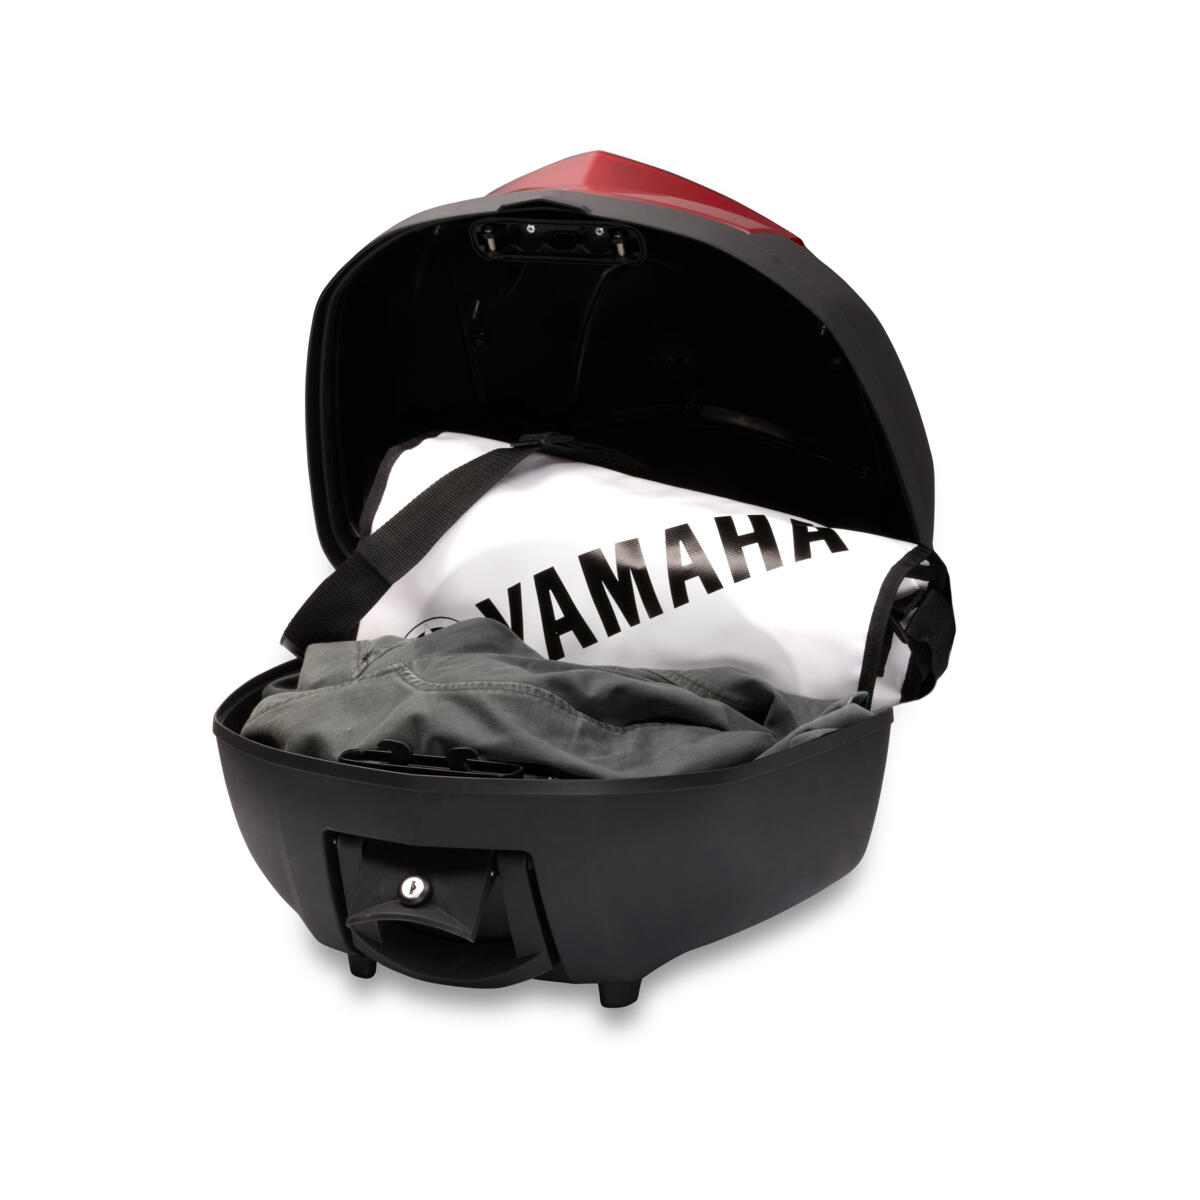 Hoogwaardige topkoffer voor extra bagage/opbergcapaciteit op je Yamaha.